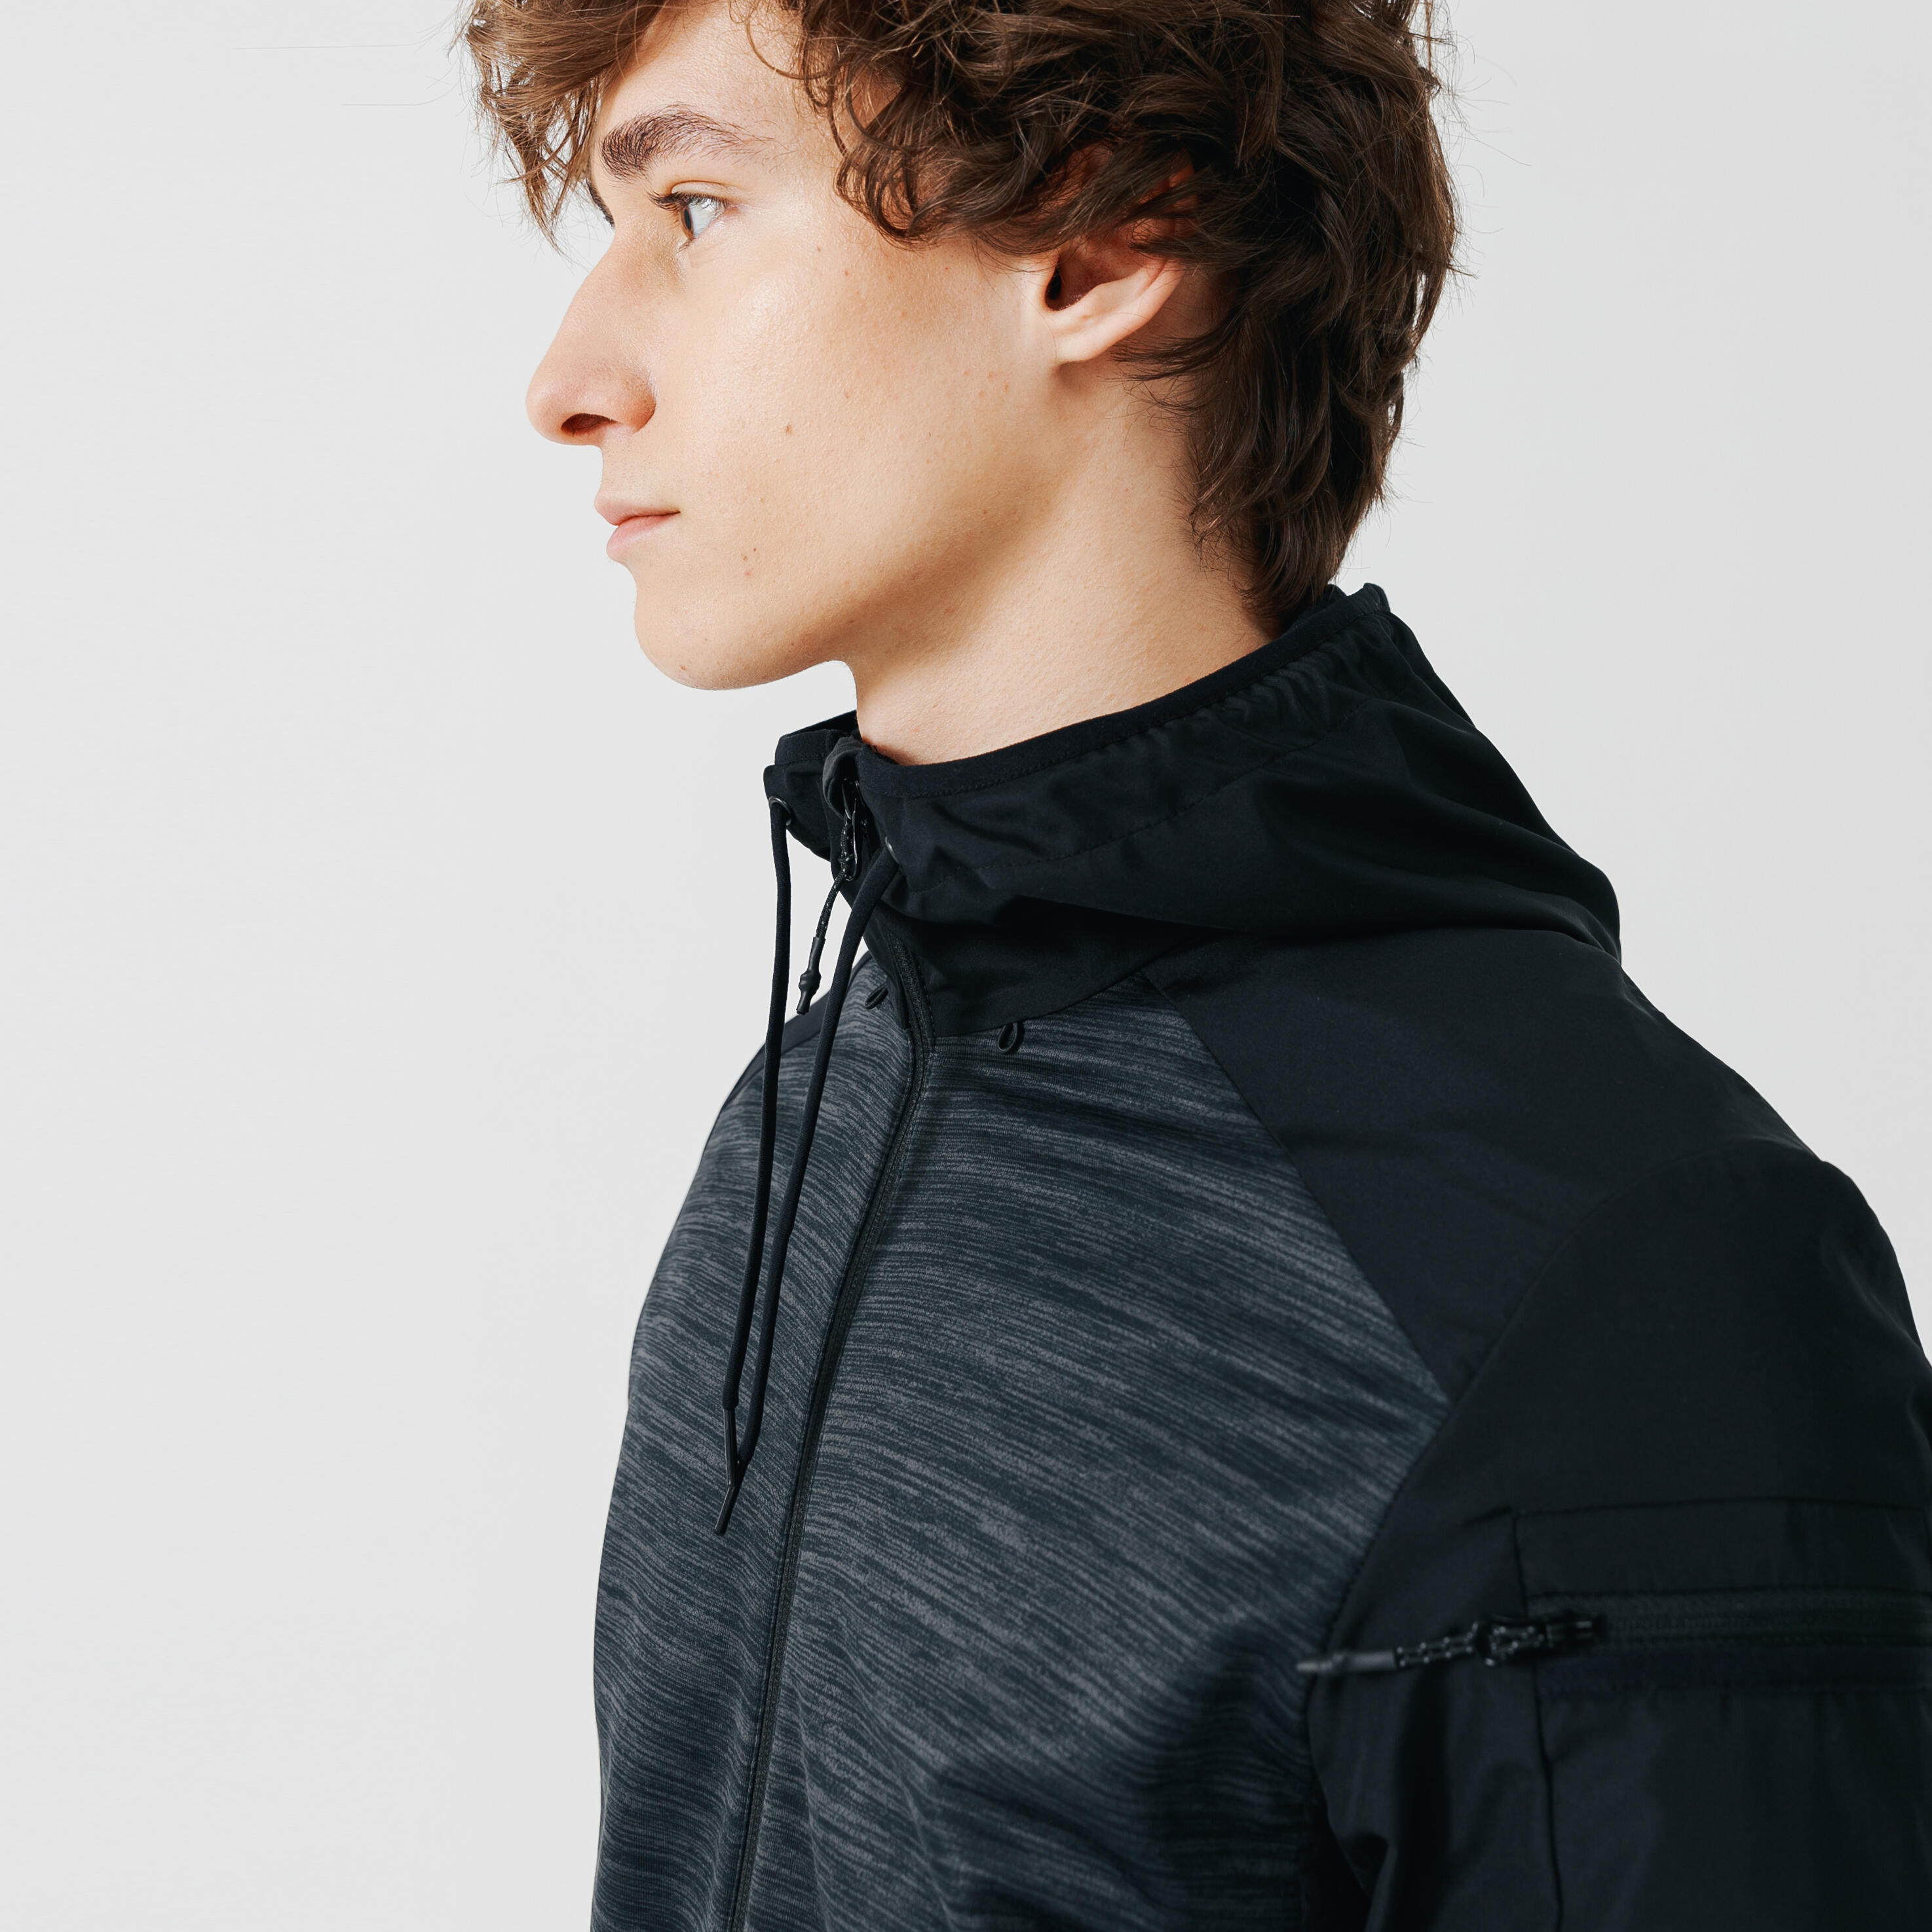 Kalenji Decathlon Men's Sweater Black Gray 1/4 Zip Micro-fleece Lined XS